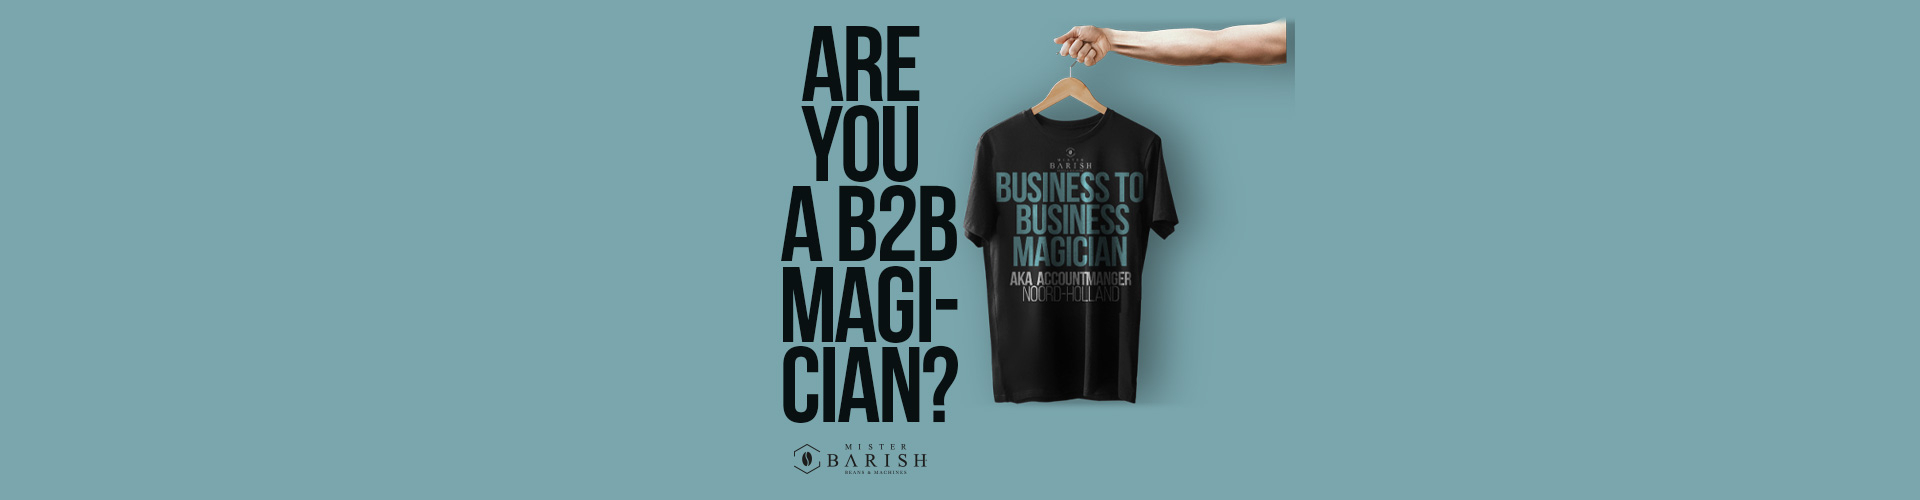 Accountmanager - B2B Magician